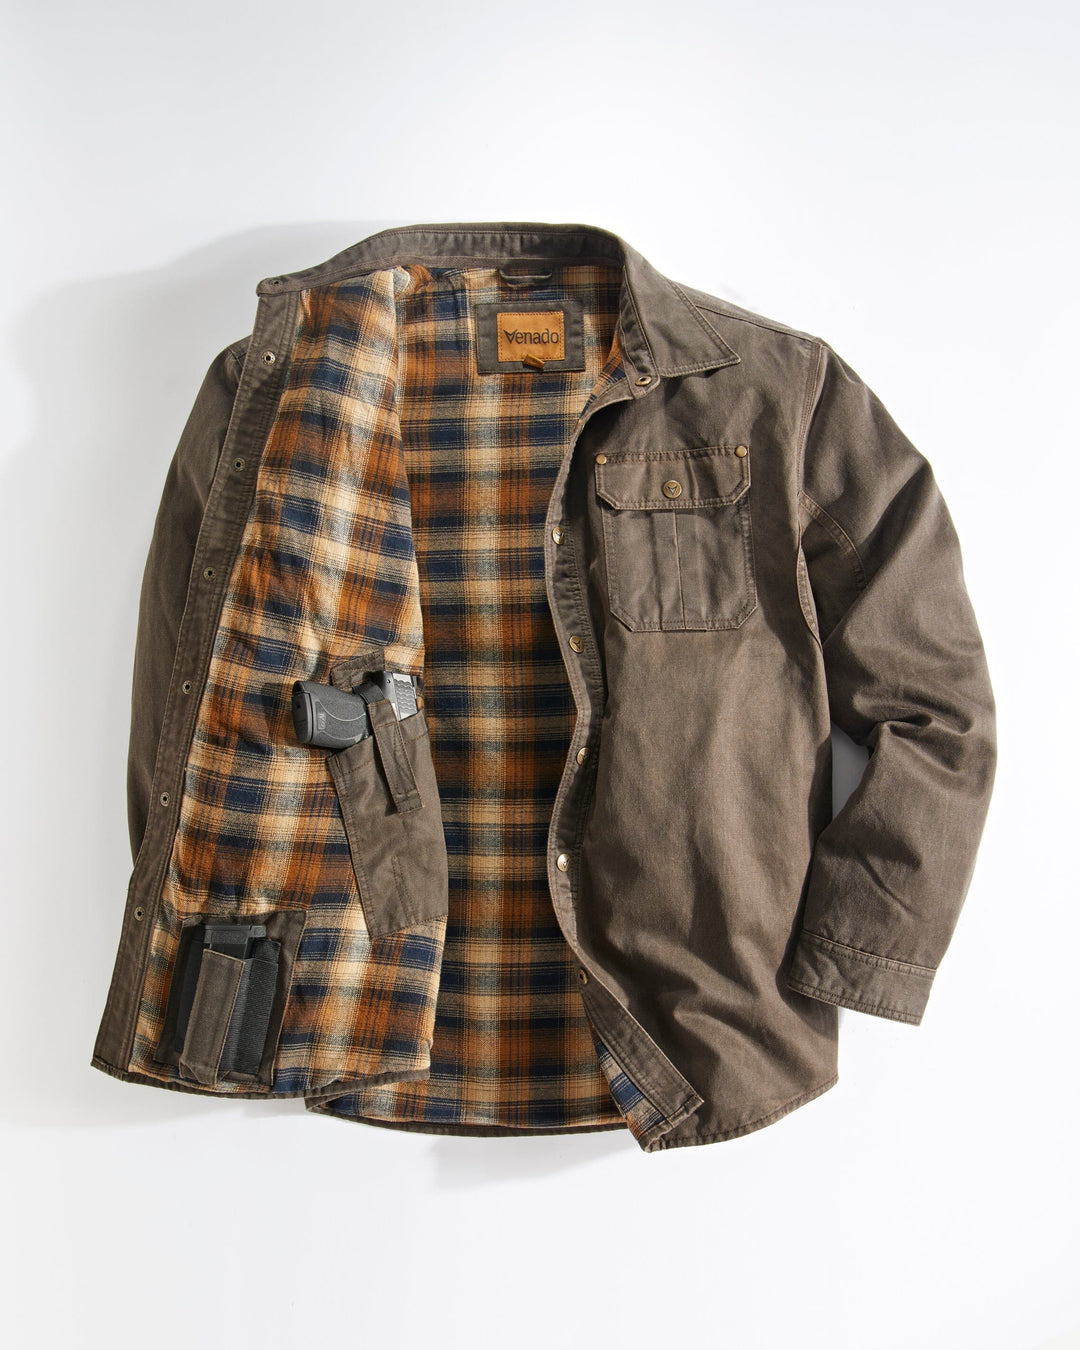 Bountyman Concealed Carry Shirt Jacket Mens Outerwear Venado 